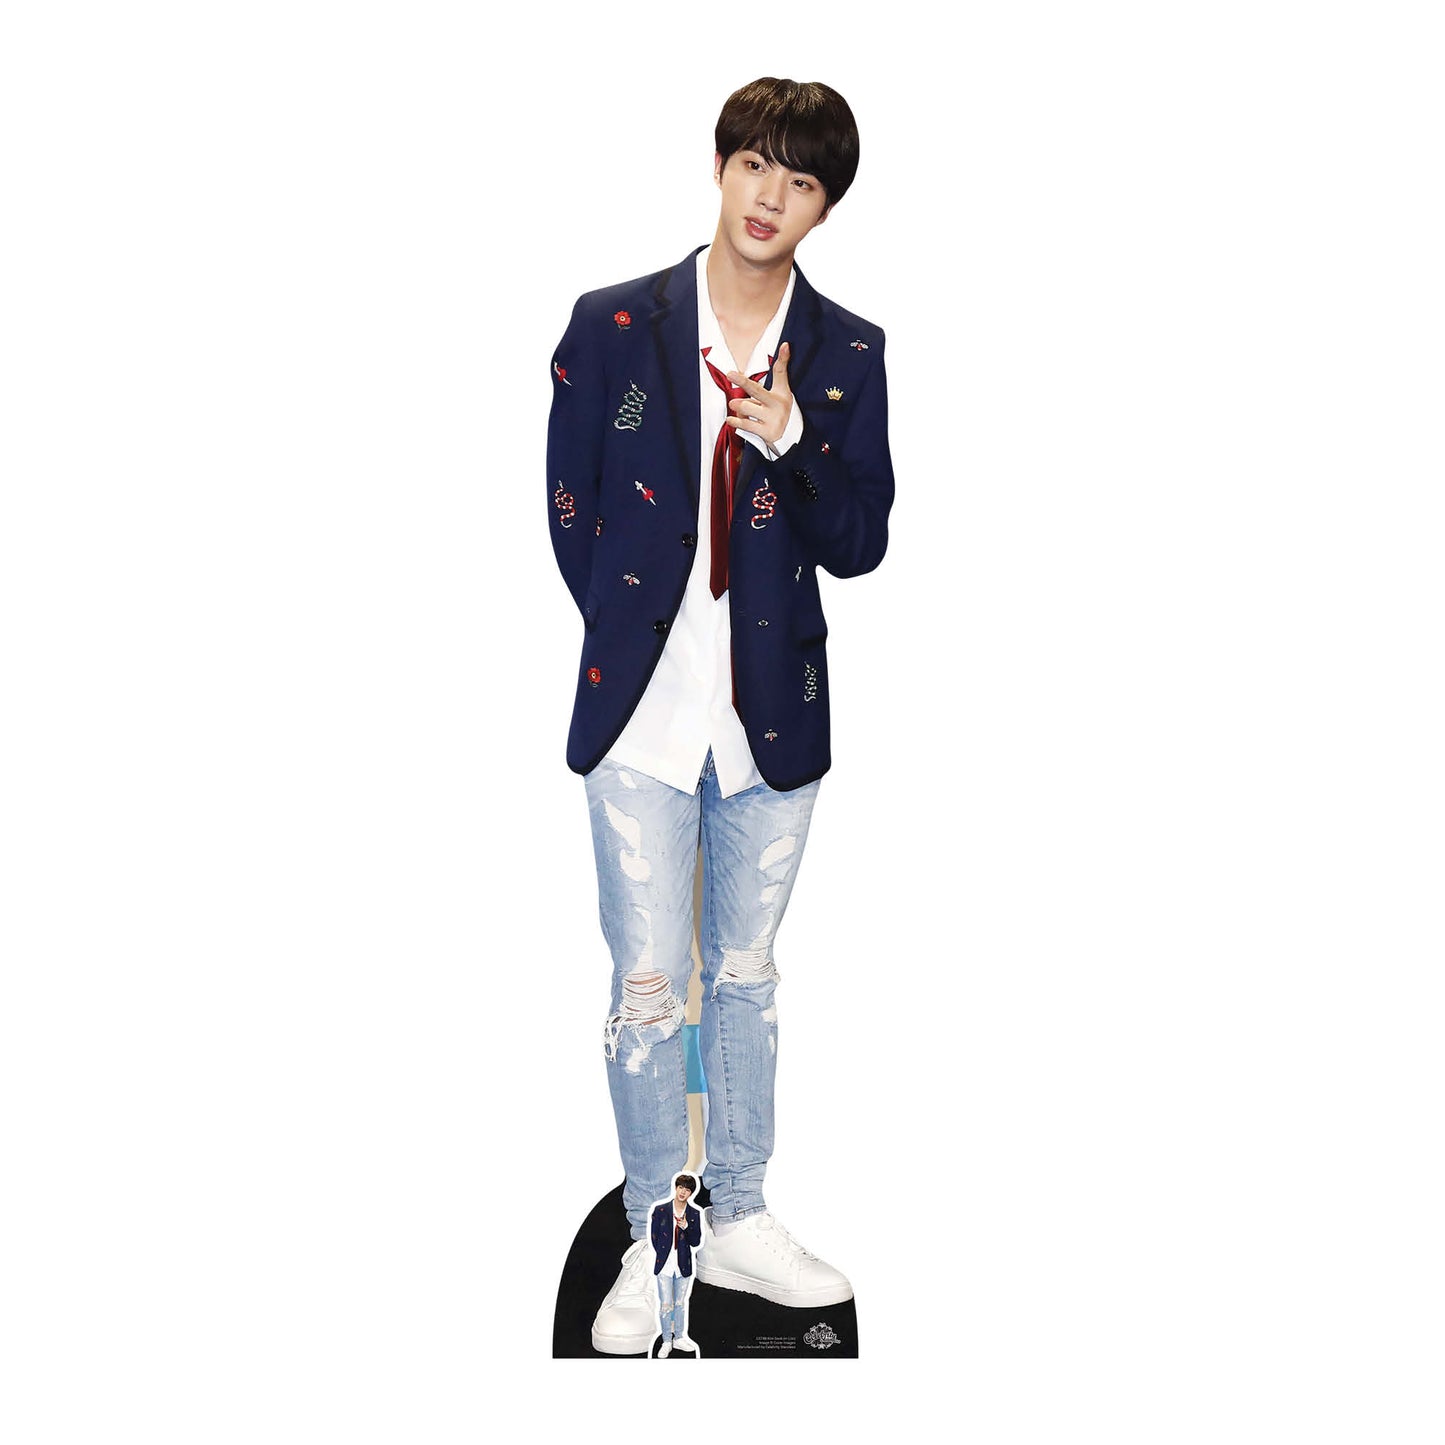 CS748 Kim Seok-jin (Jin) Red Tie BTS BANGTAN BOYS Height 179cm Lifesize Cardboard Cut Out With Mini